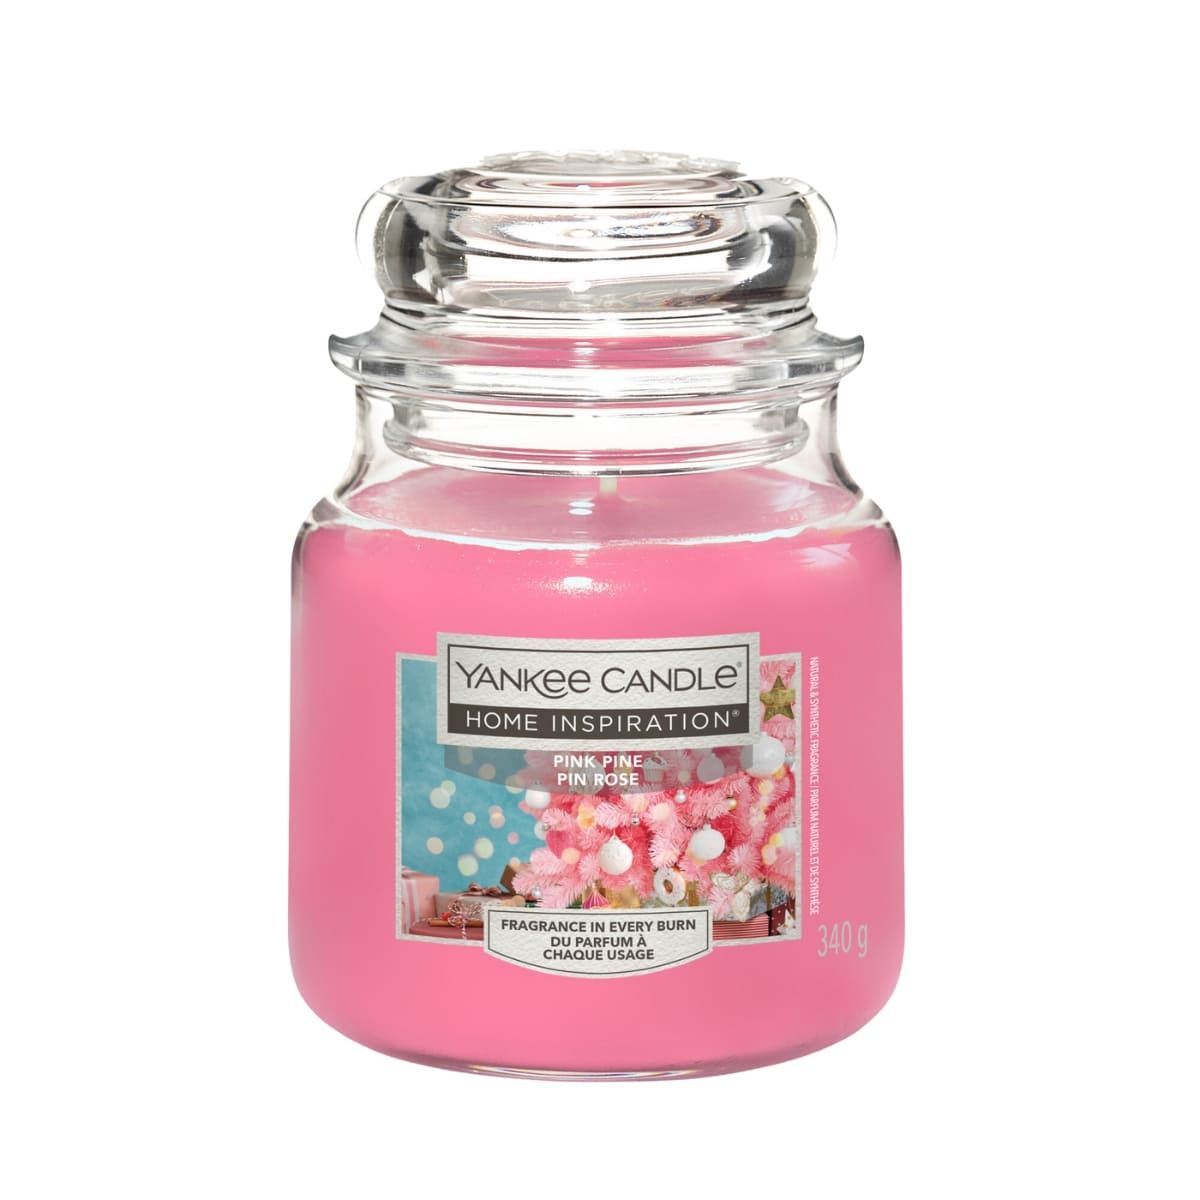 Ароматическая Свеча Yankee Candle Home Inspiration Pink Pine, 340 гр ароматическая свеча yankee candle home inspiration exotic fruits 340 гр